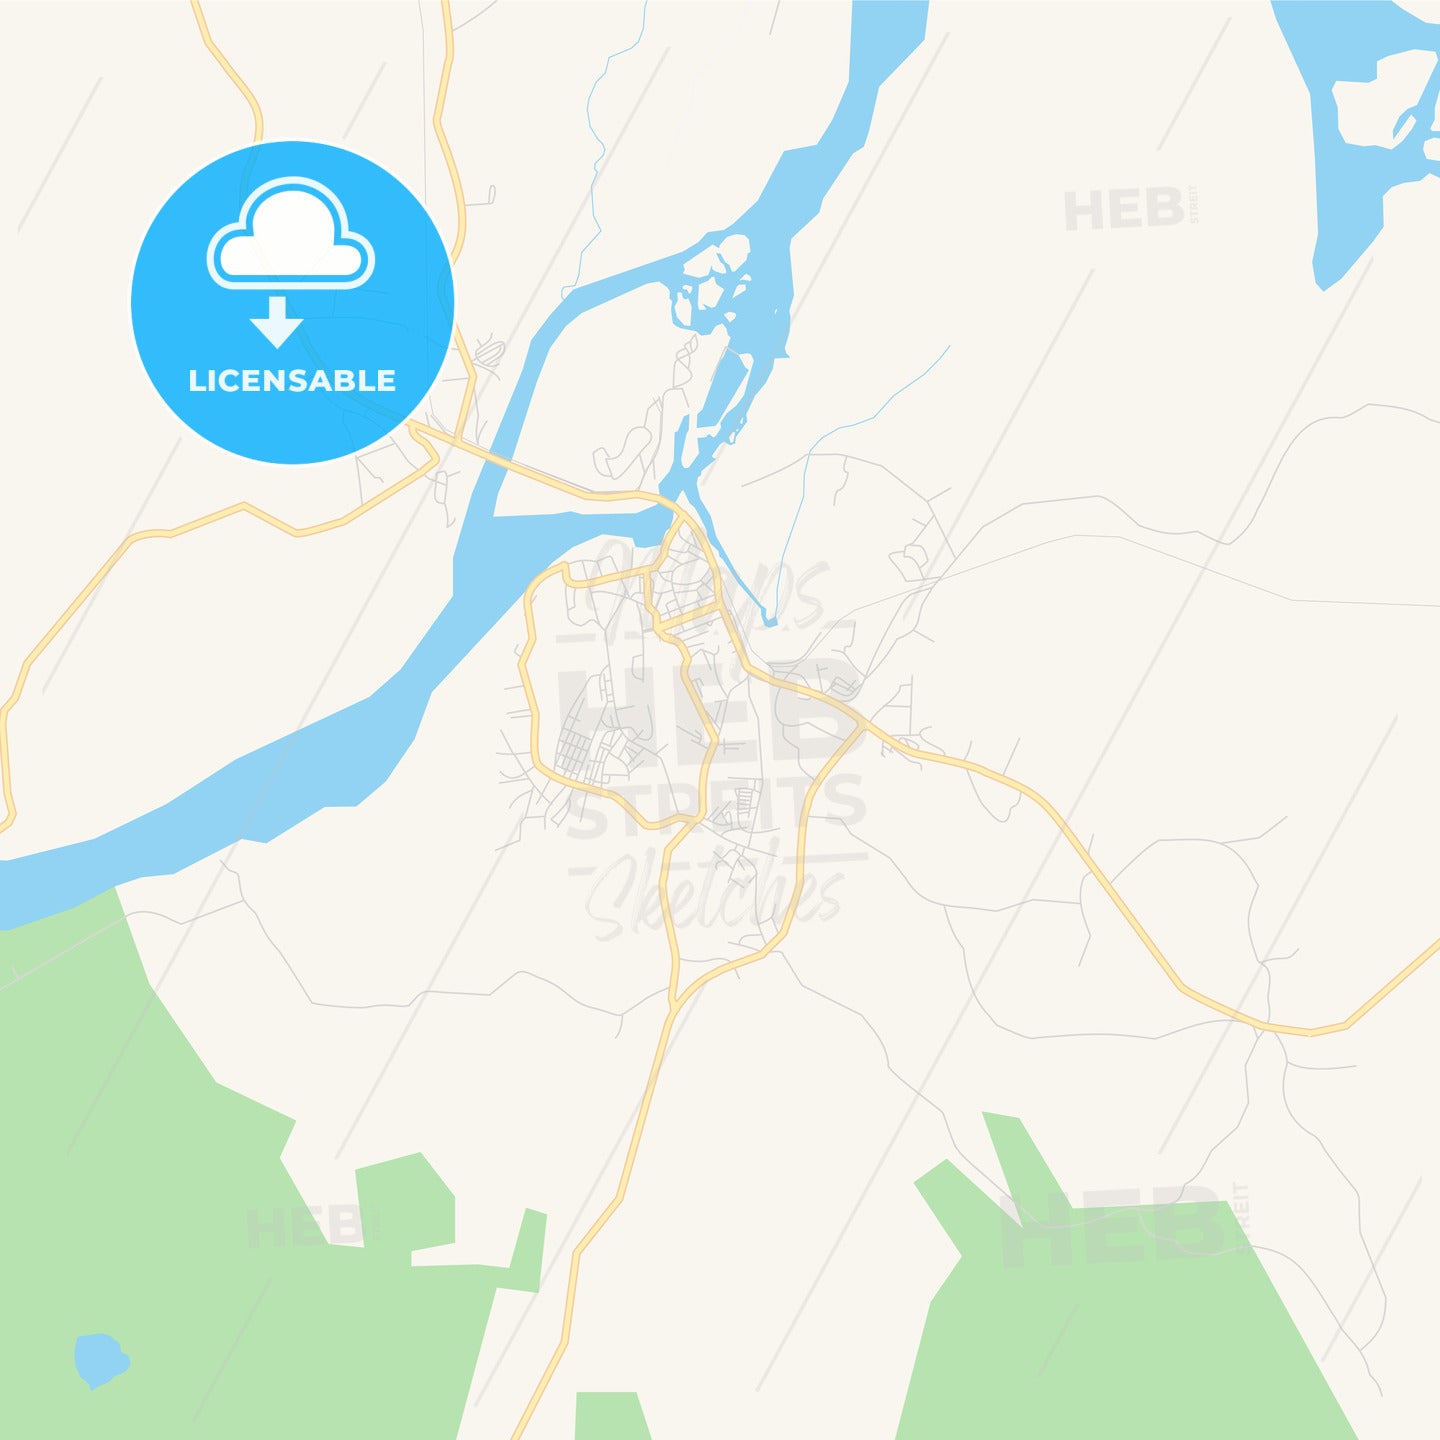 Printable street map of Edea, Cameroon